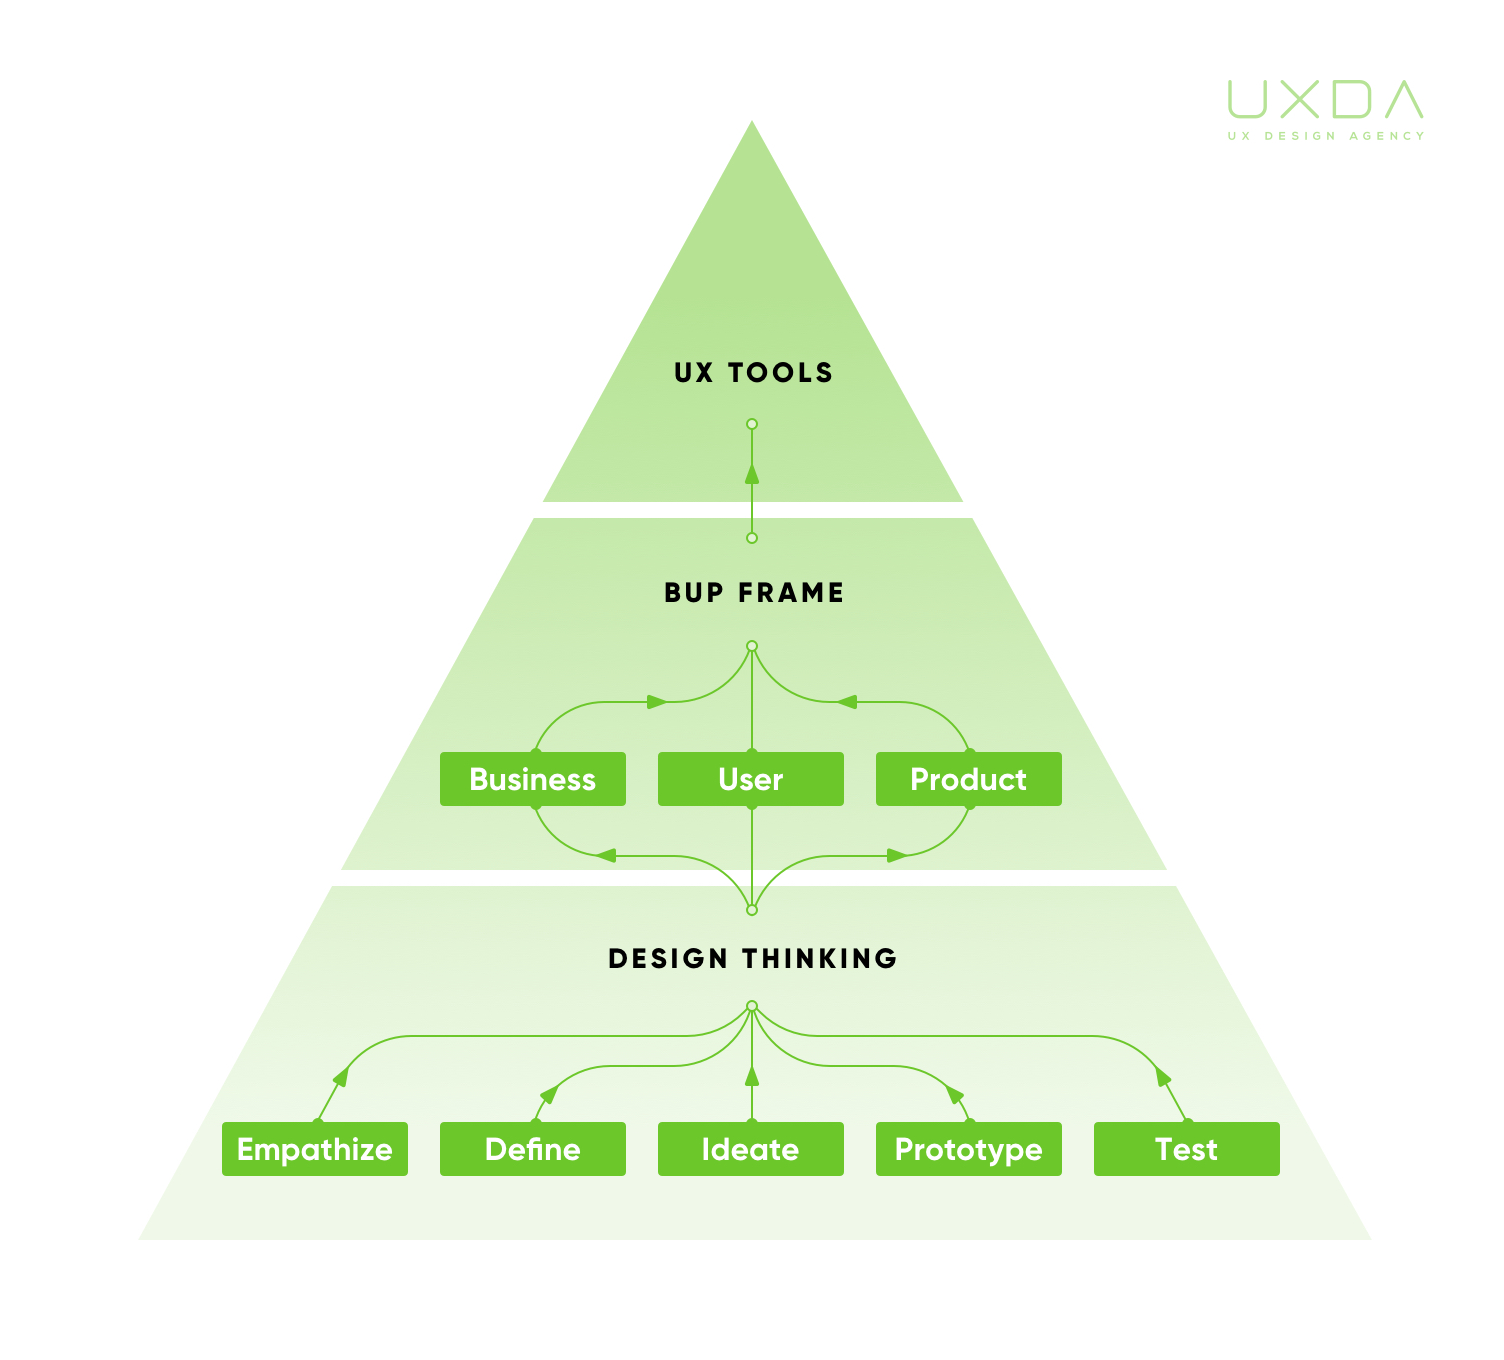 ux-design-for-banking-uxda-work-process-1-S.jpg